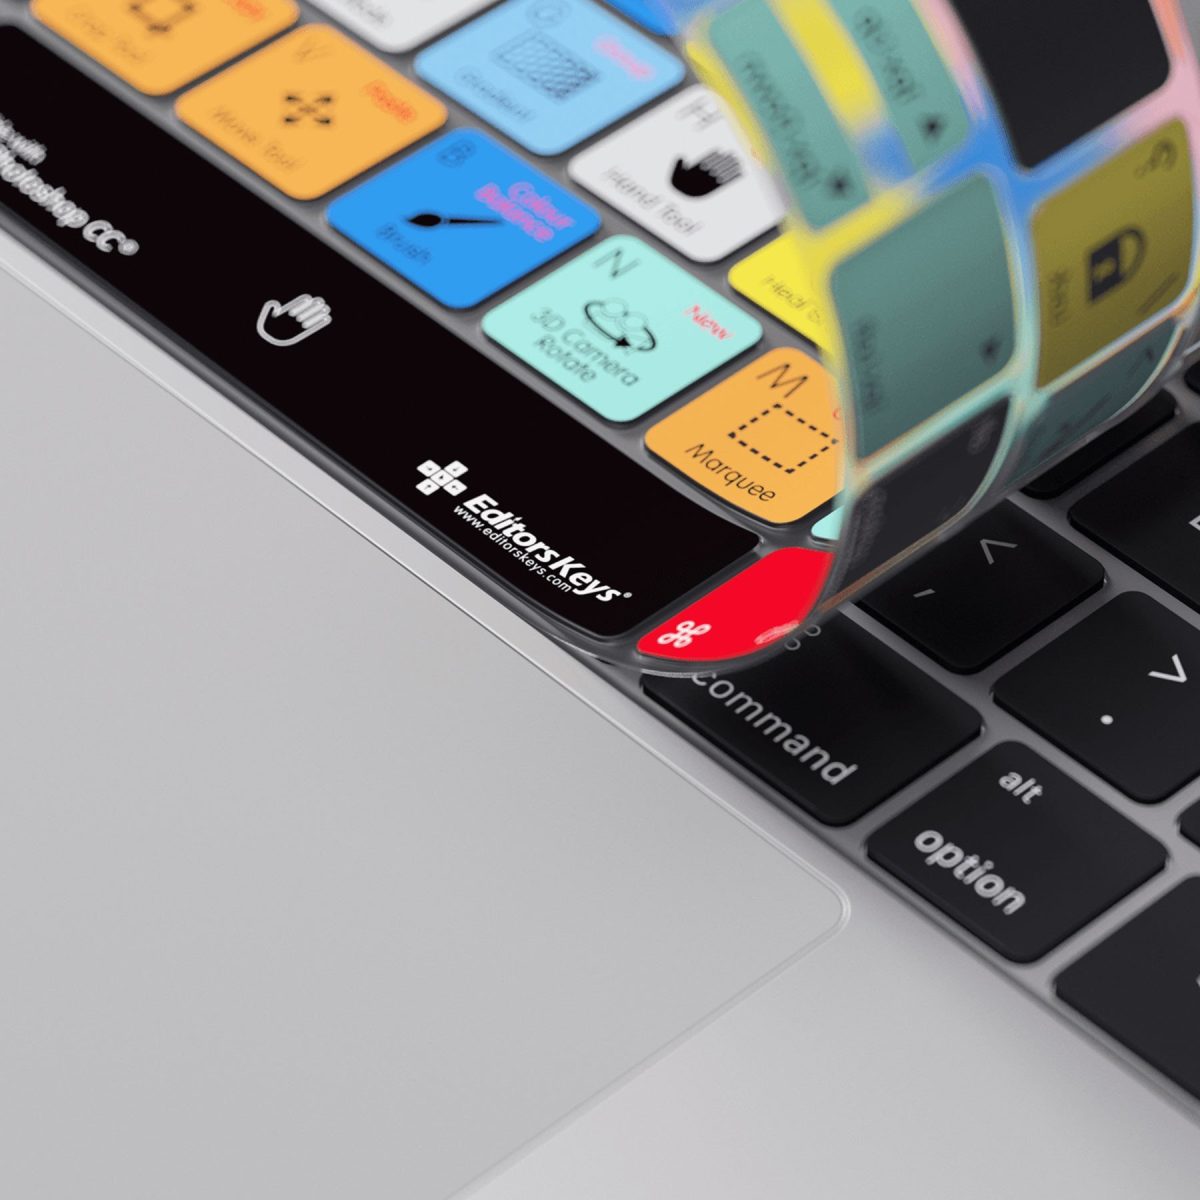 MacBook Pro Touchbar Keyboard Cover with Adobe Photoshop Shortcut